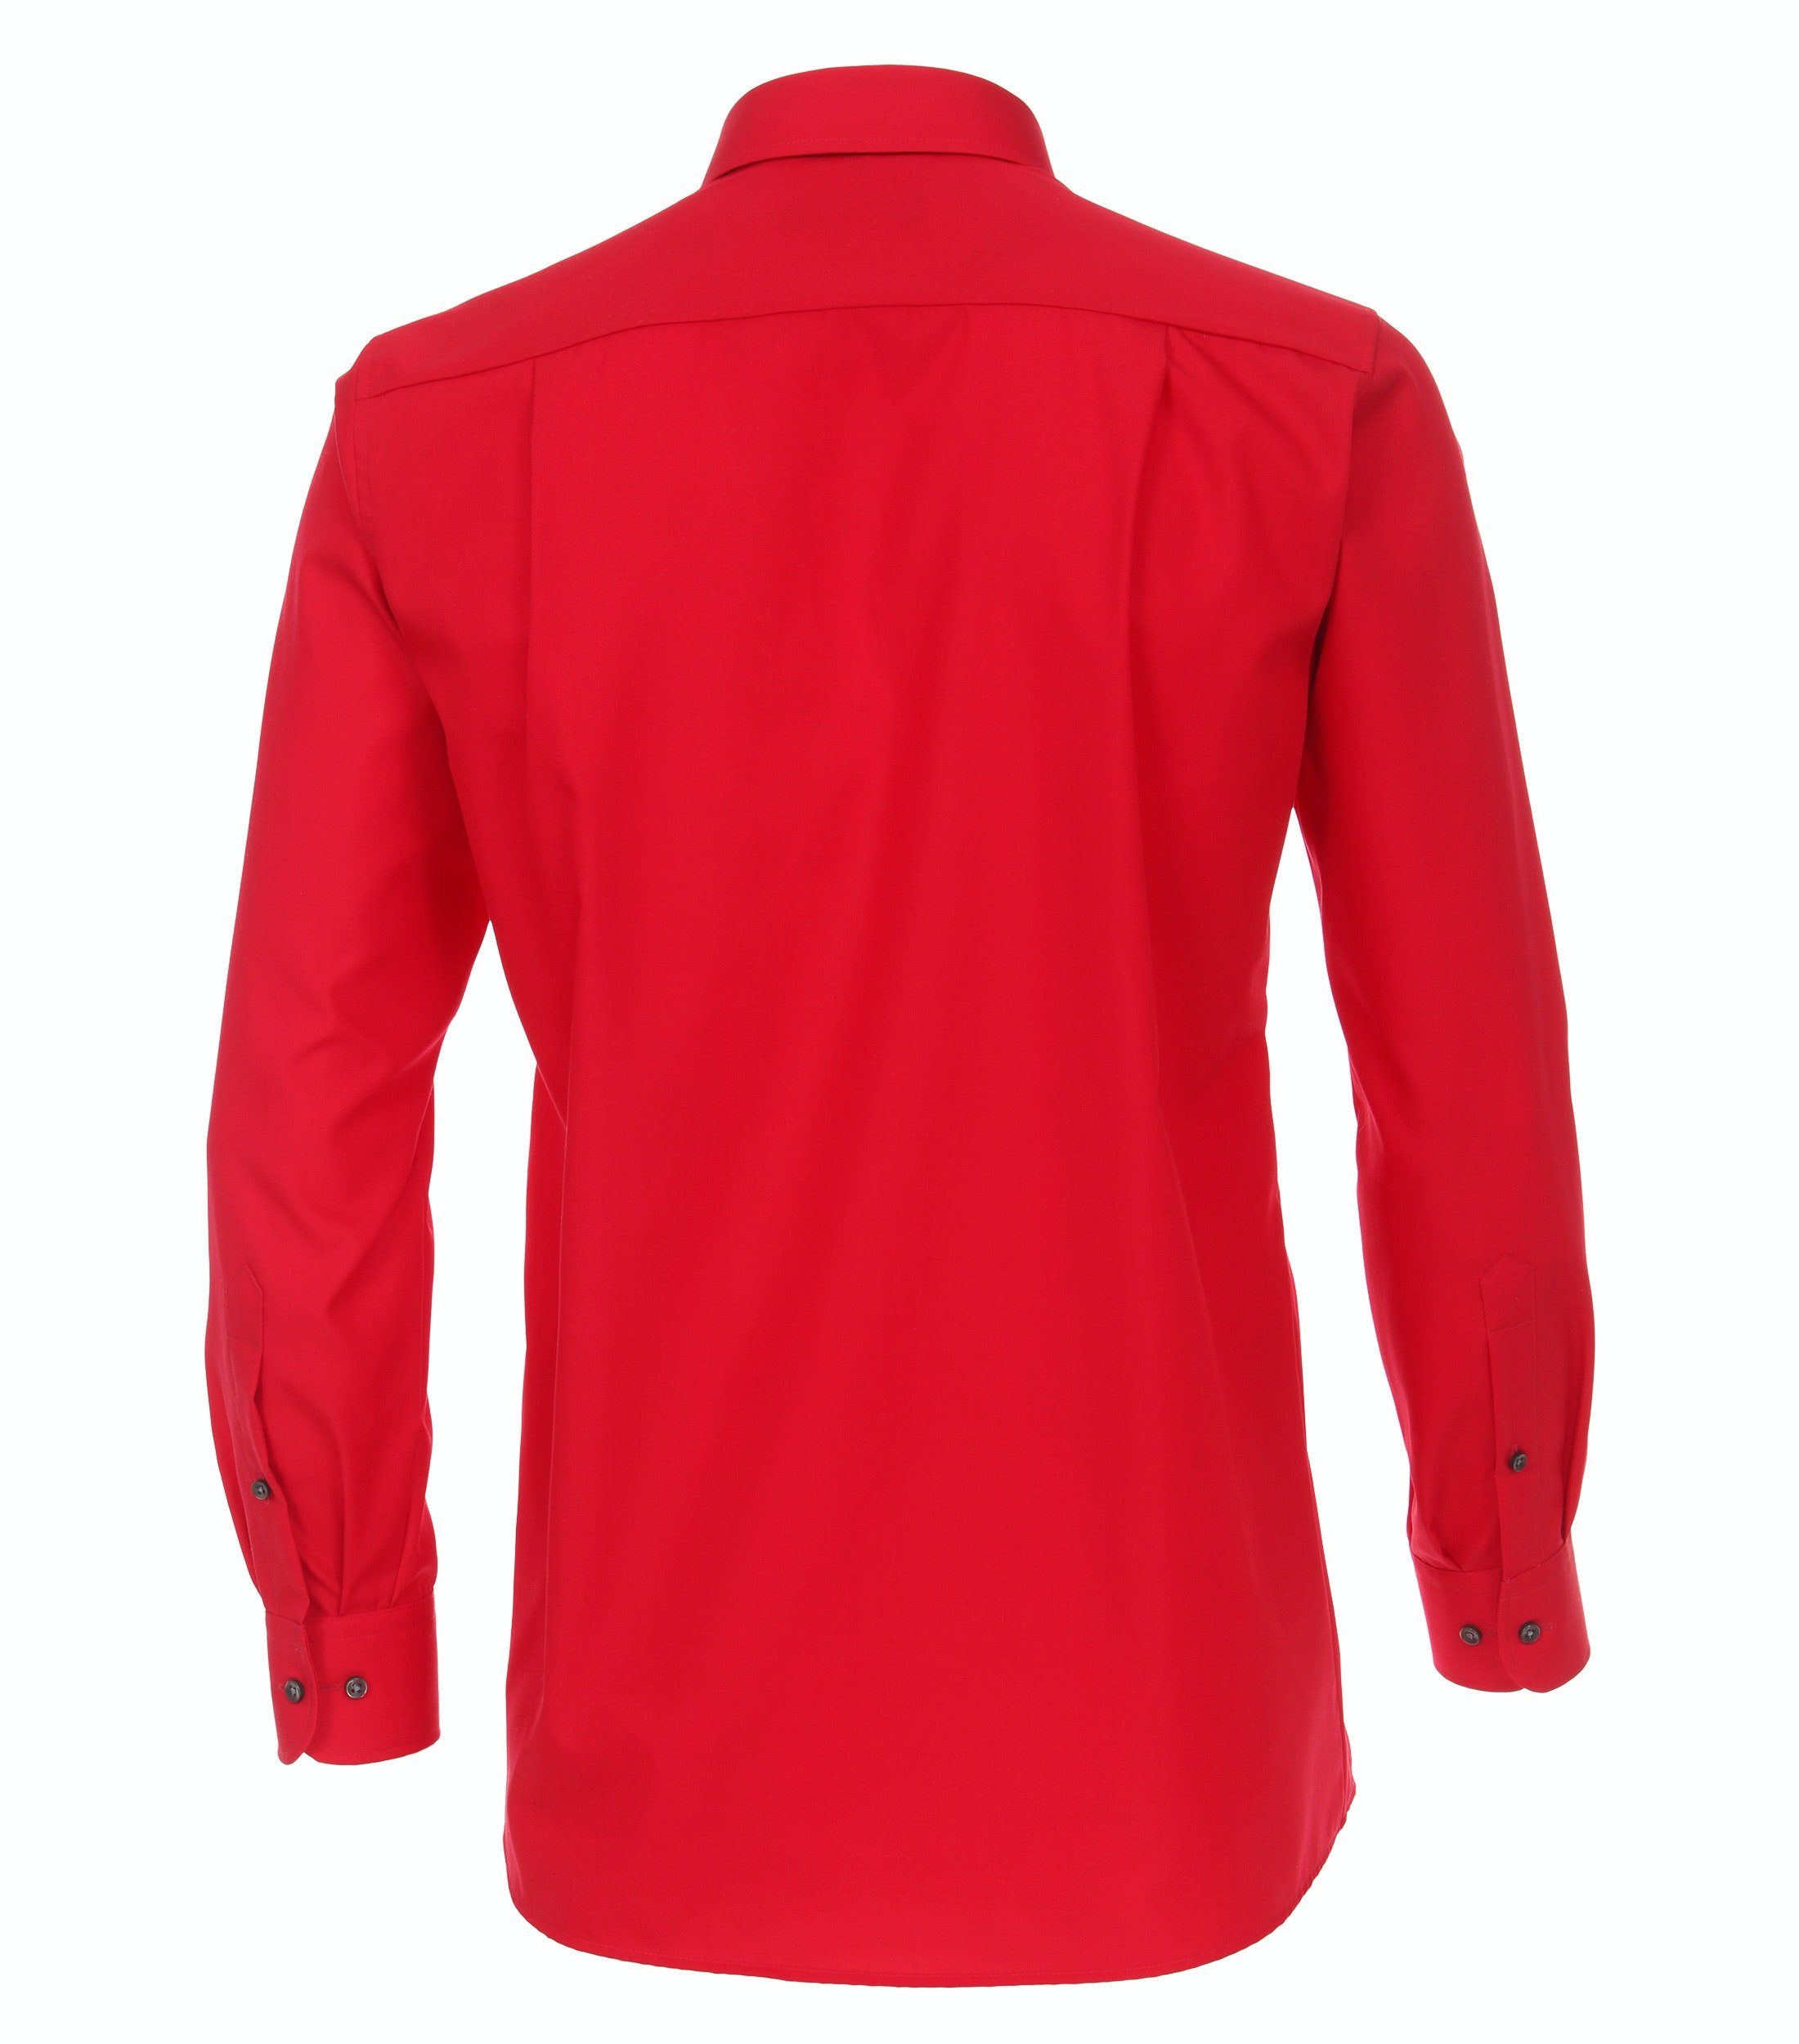 CASAMODA Businesshemd Einfarbig Rot Rot Langarm Businesshemd - sattes Fit Comfort - - 